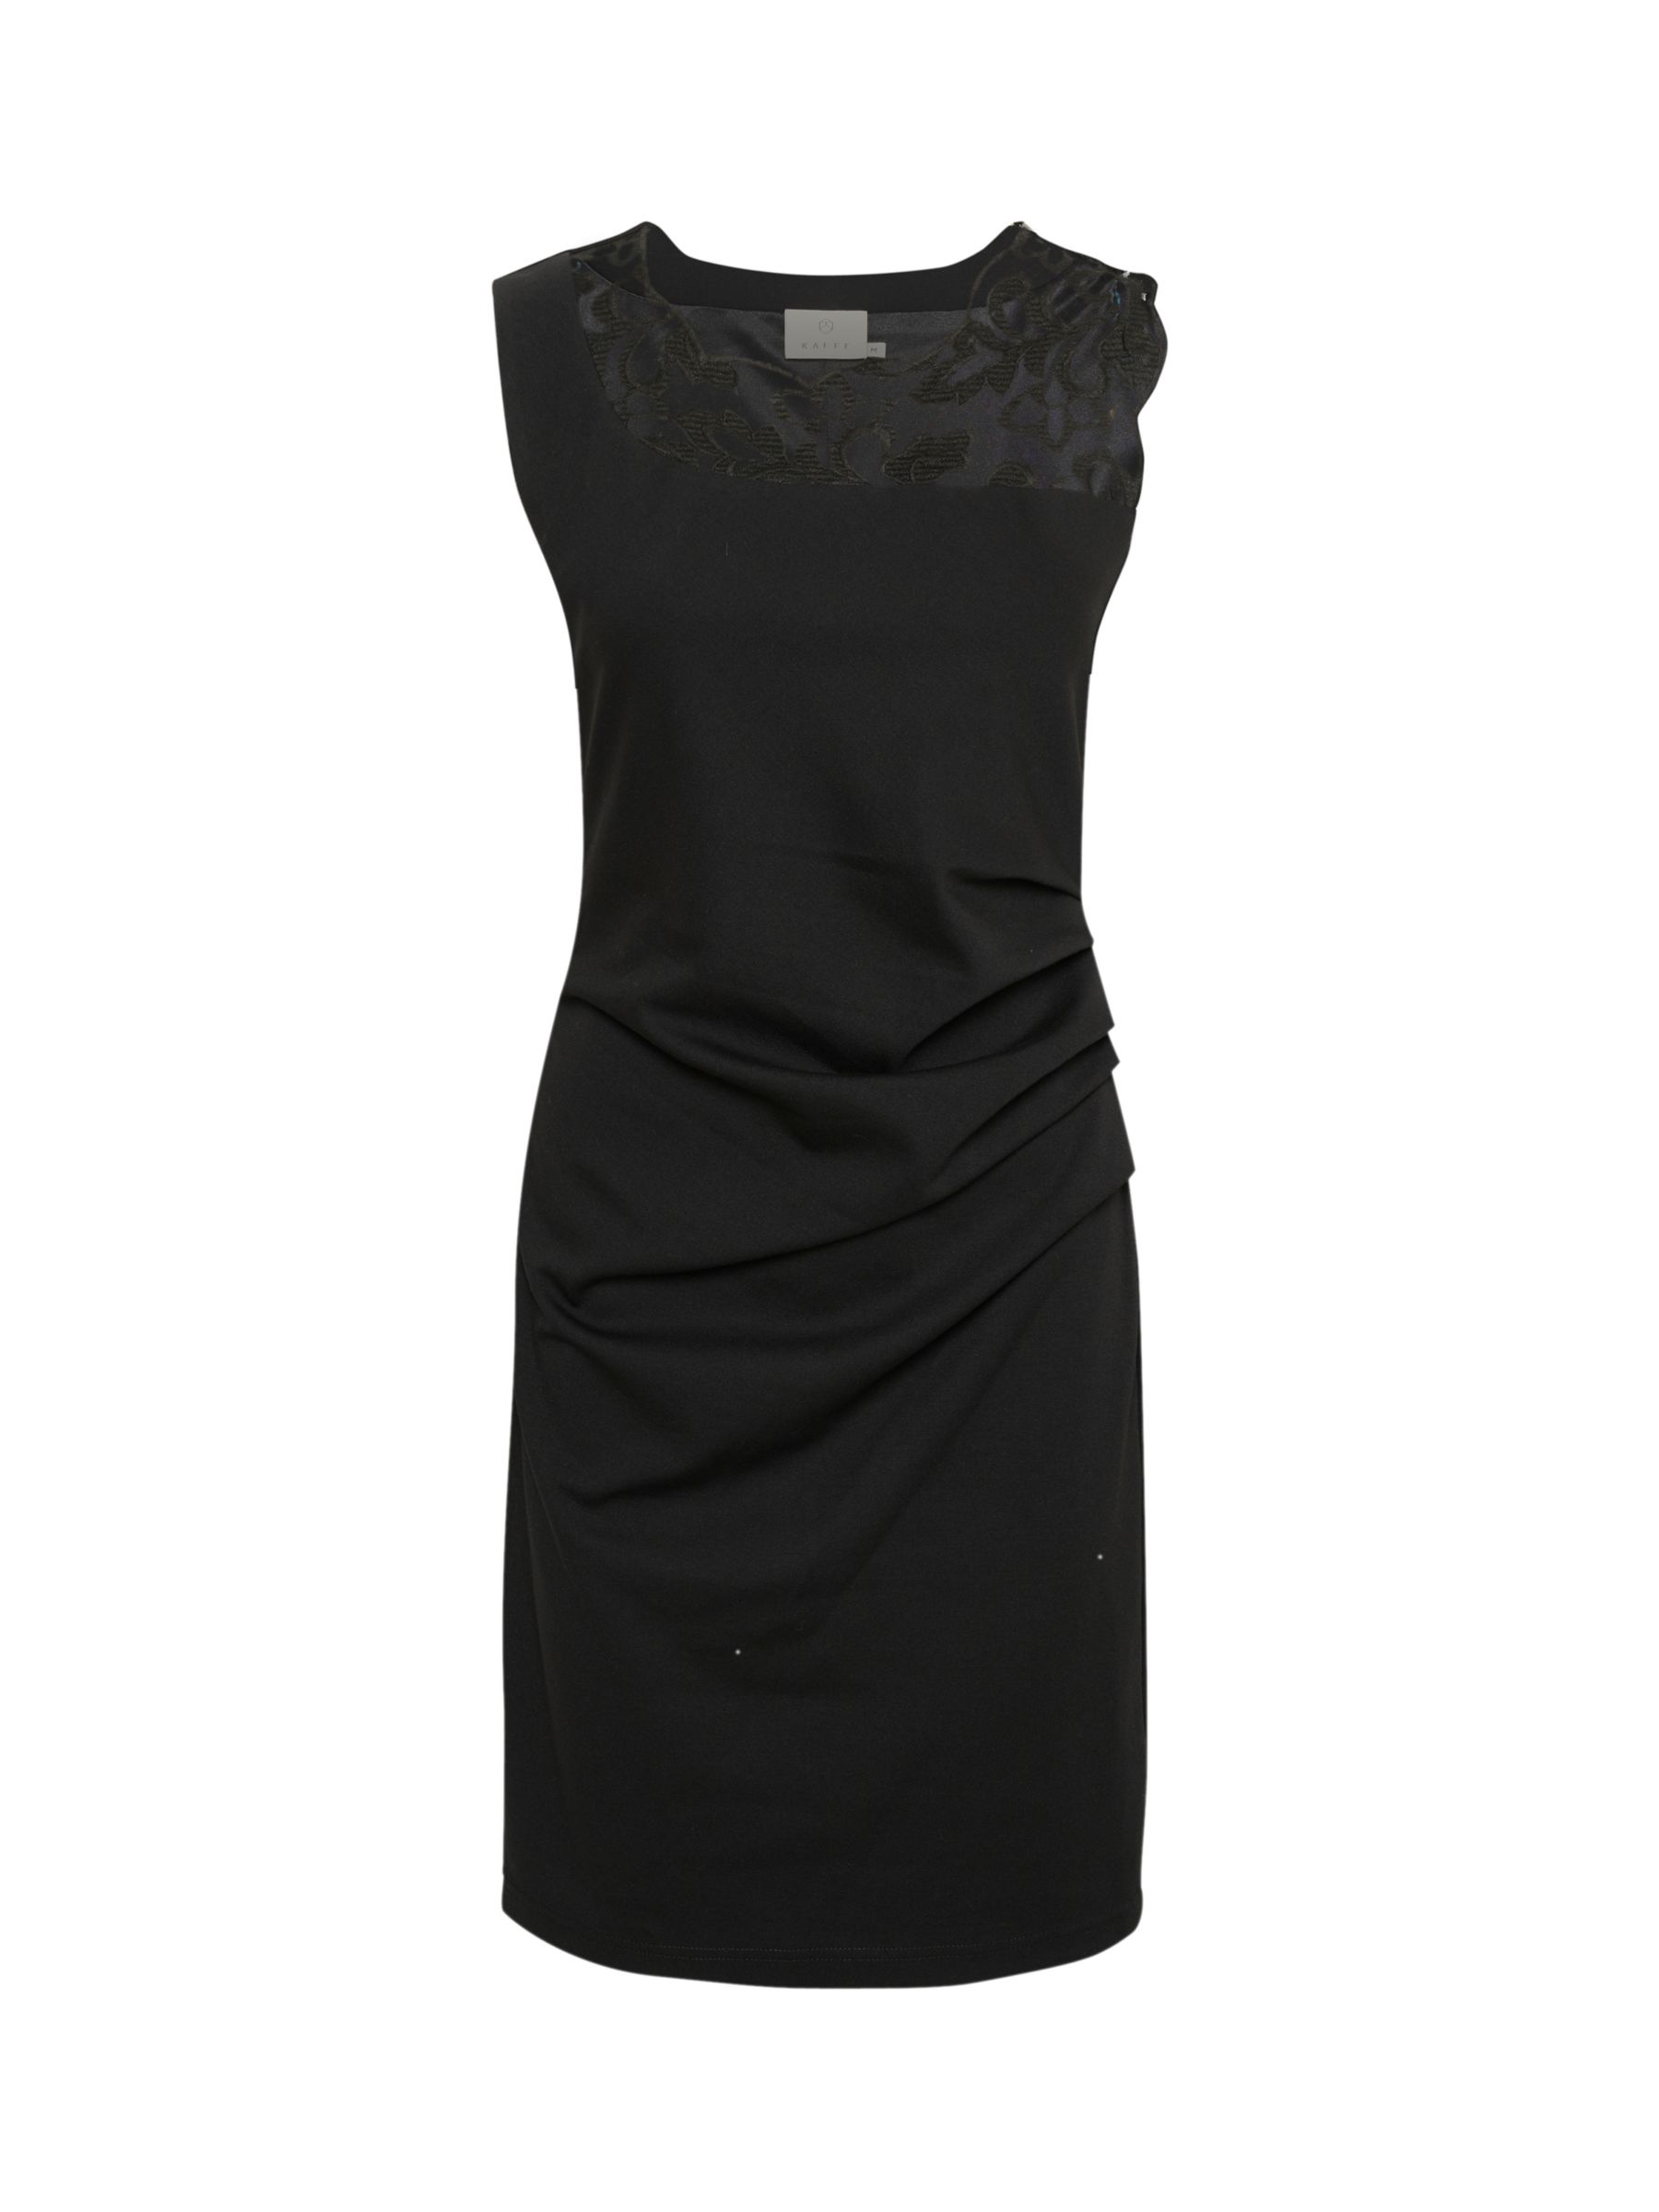 Buy KAFFE India Sleeveless Cocktail Dress, Black Online at johnlewis.com